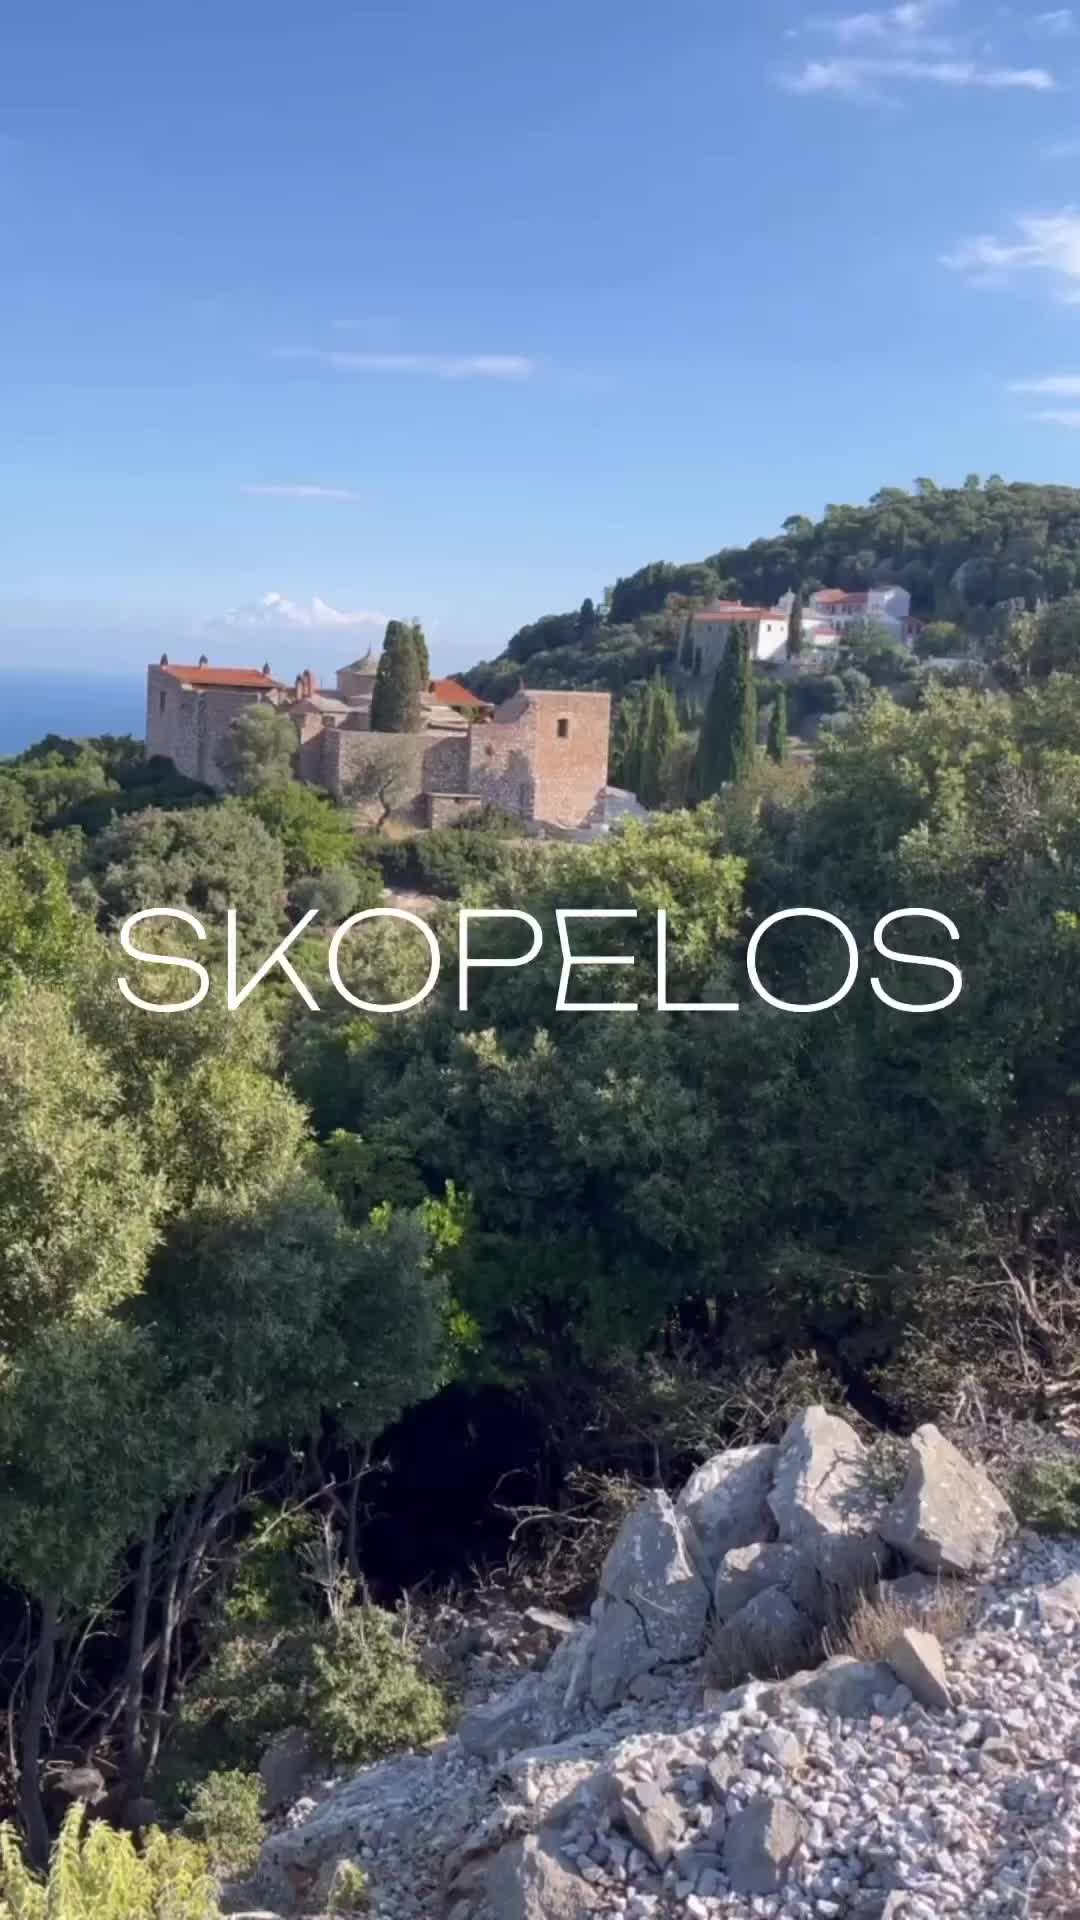 Explore Skopelos: The Monastery Road Adventure